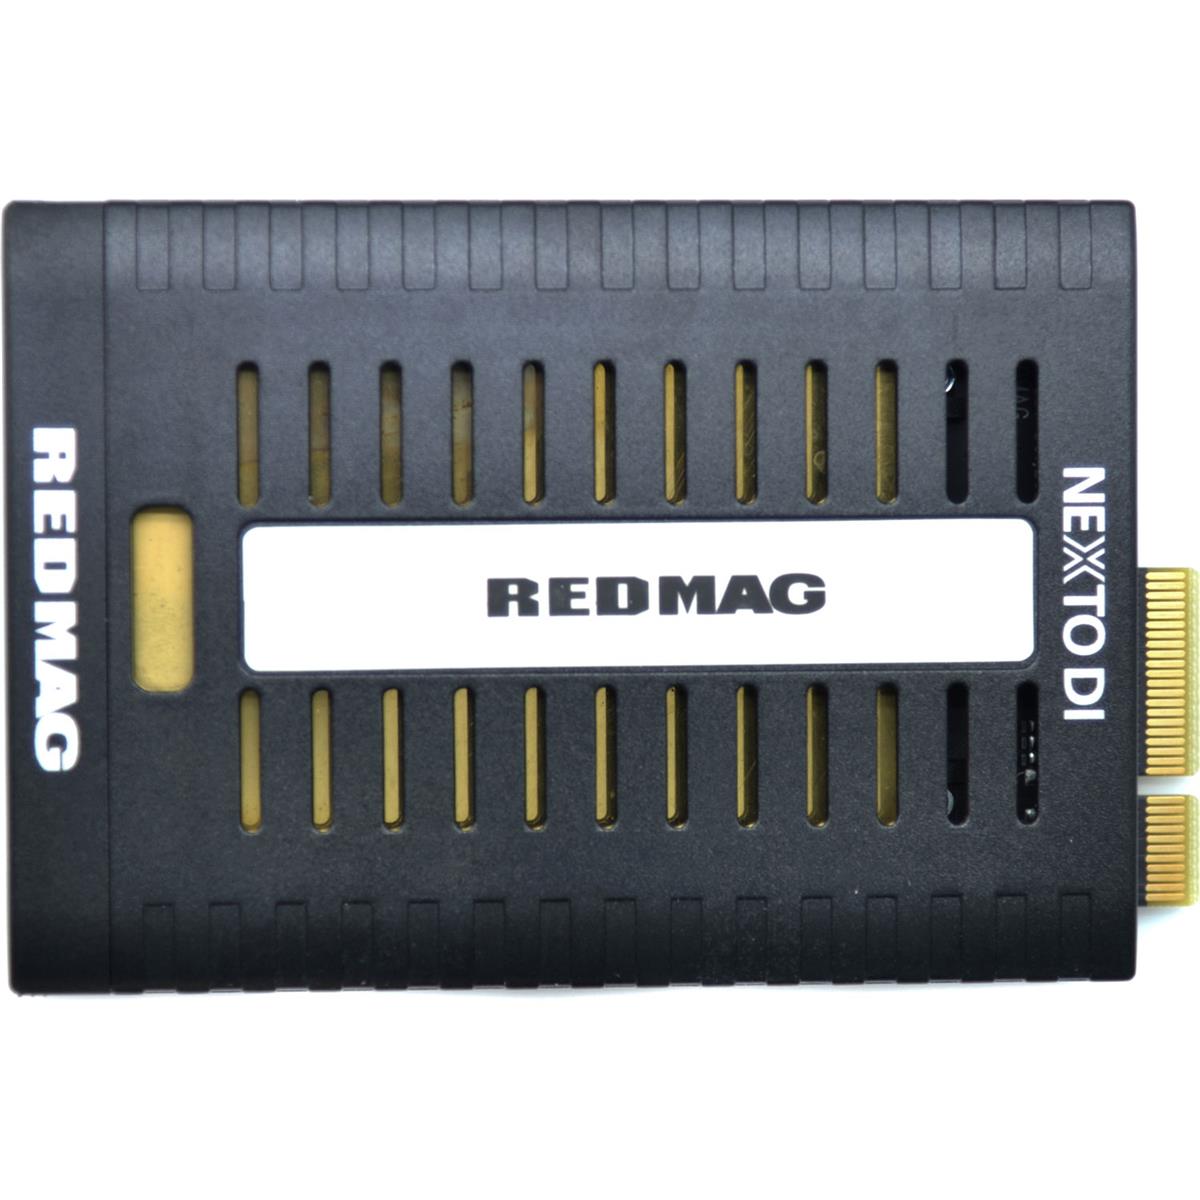 Image of TV Logic REDMAG Module for NSB-25 Modular Memory Card Backup System